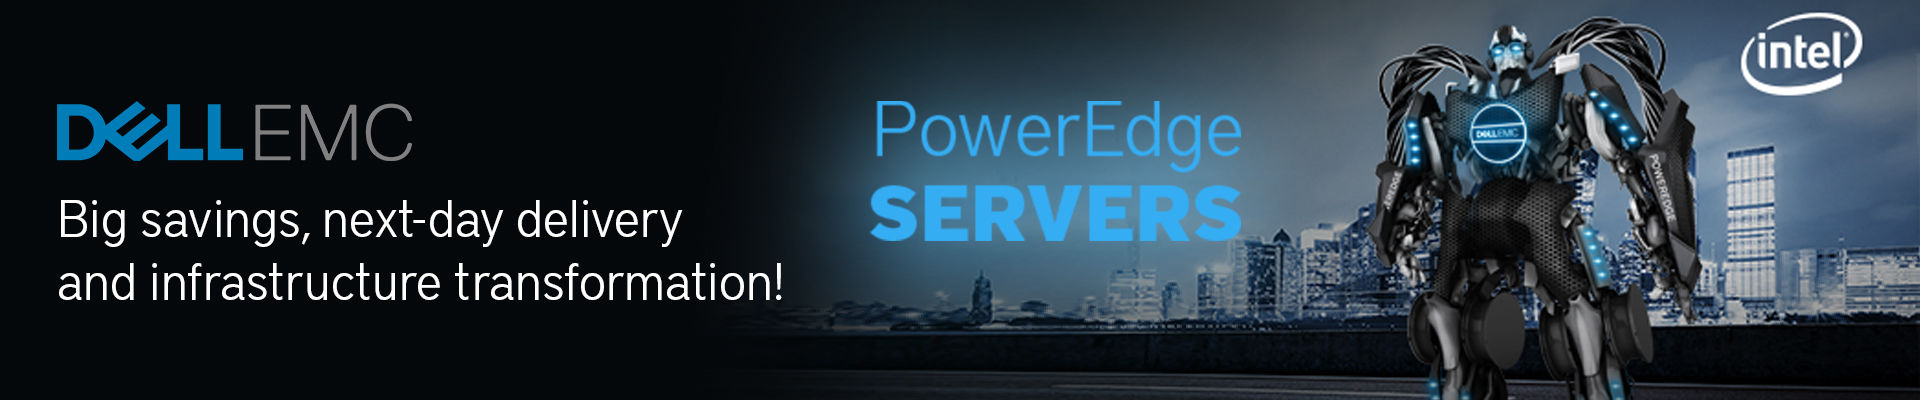 Dell EMC Power Edge Servers